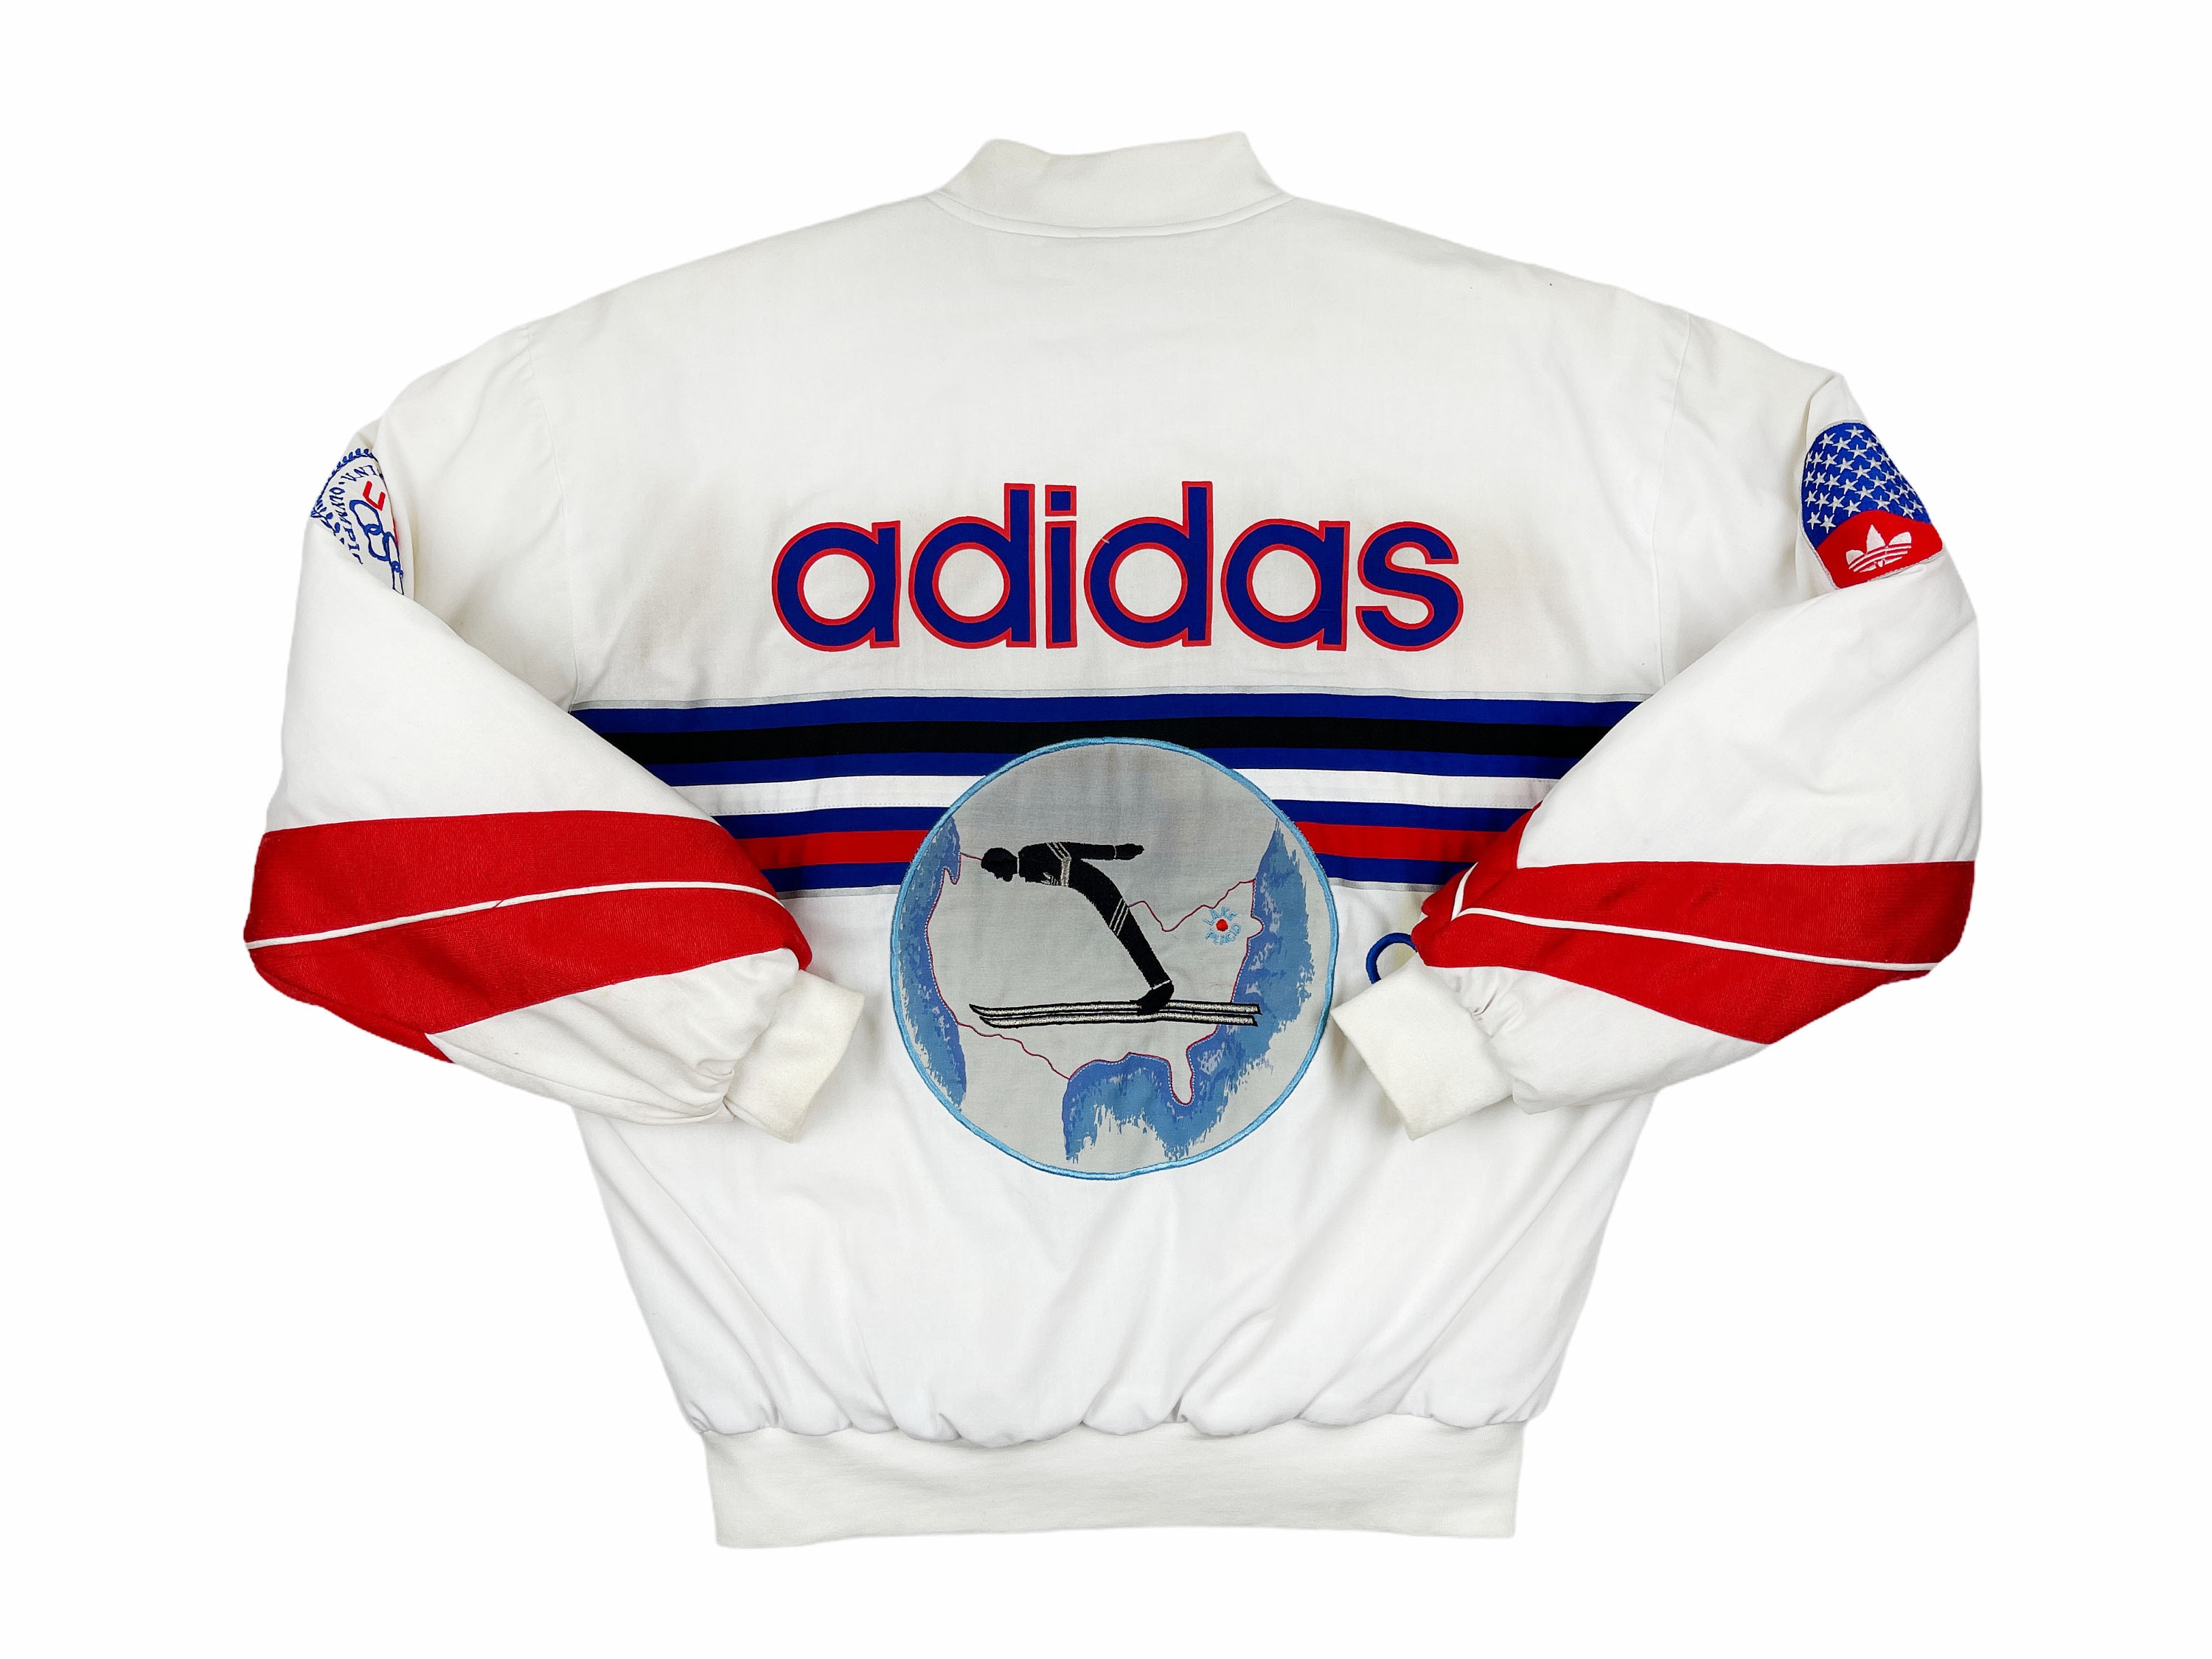 Adidas Olympic 80s Olympics Lake Placid - Etsy